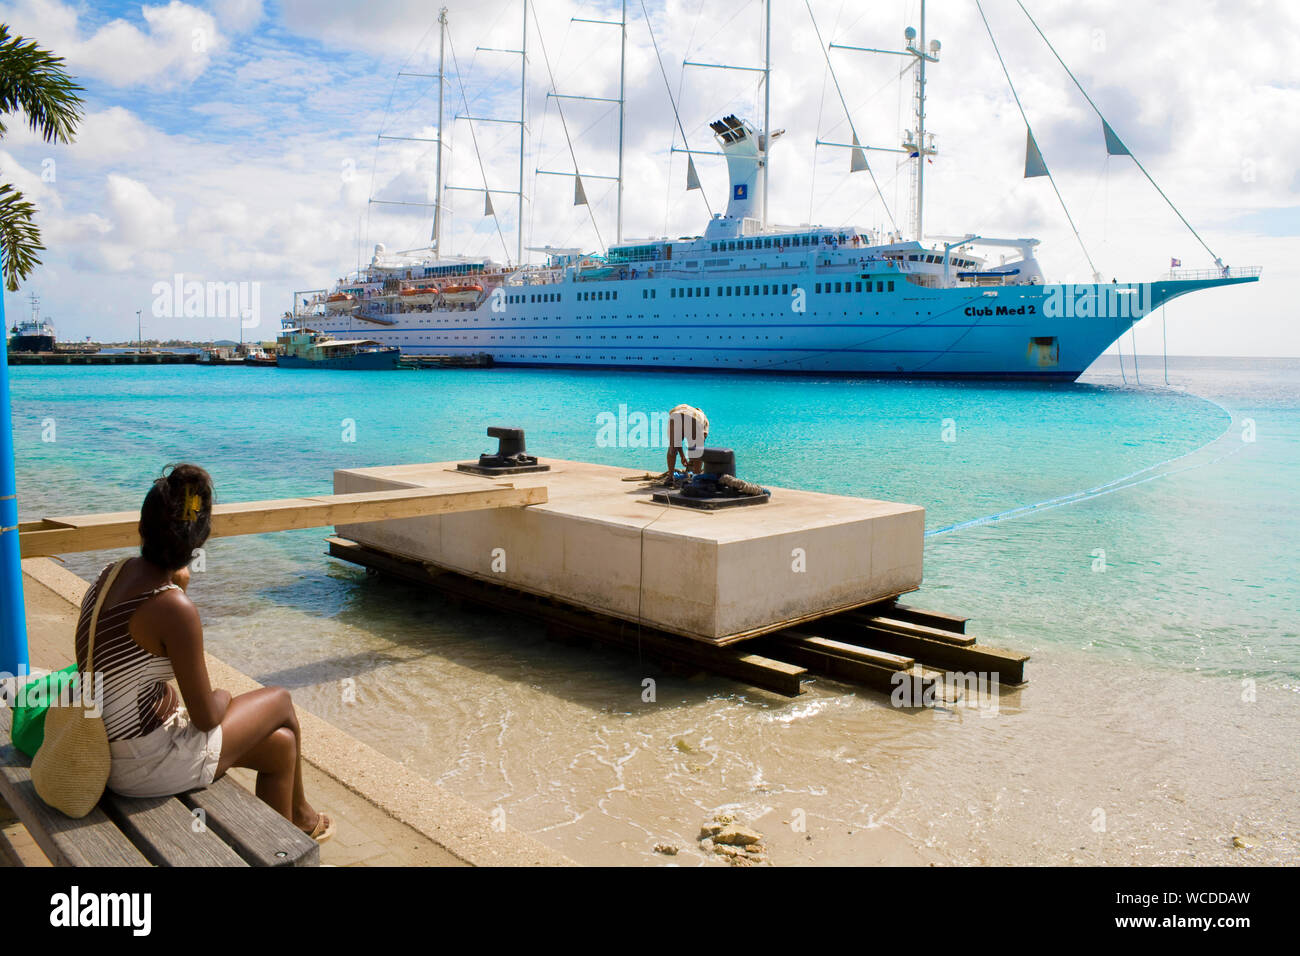 Cruise liner 'Club med 2' at Kralendijk, Bonaire, Netherland Antilles Stock Photo